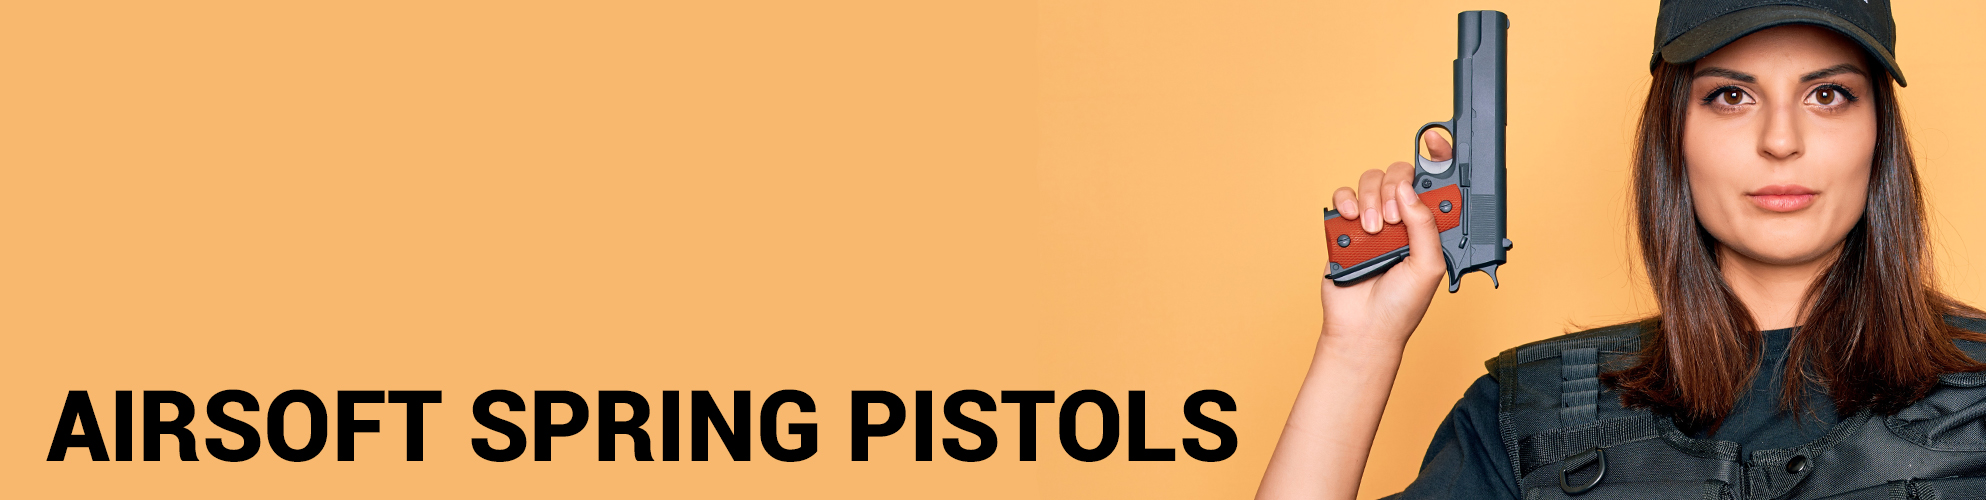 airsoft spring pistols